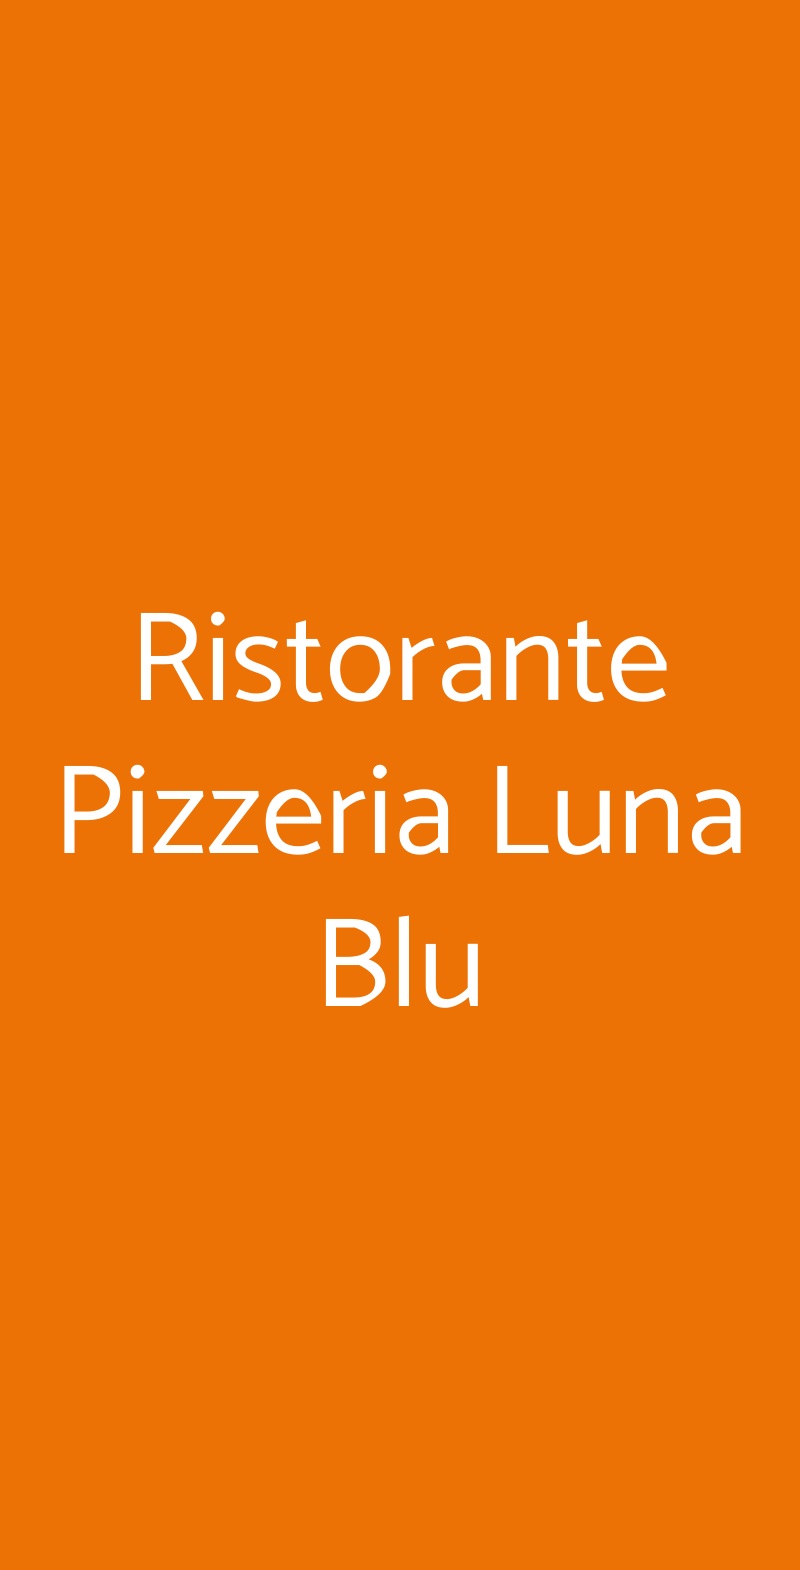 Ristorante Pizzeria Luna Blu Parma menù 1 pagina